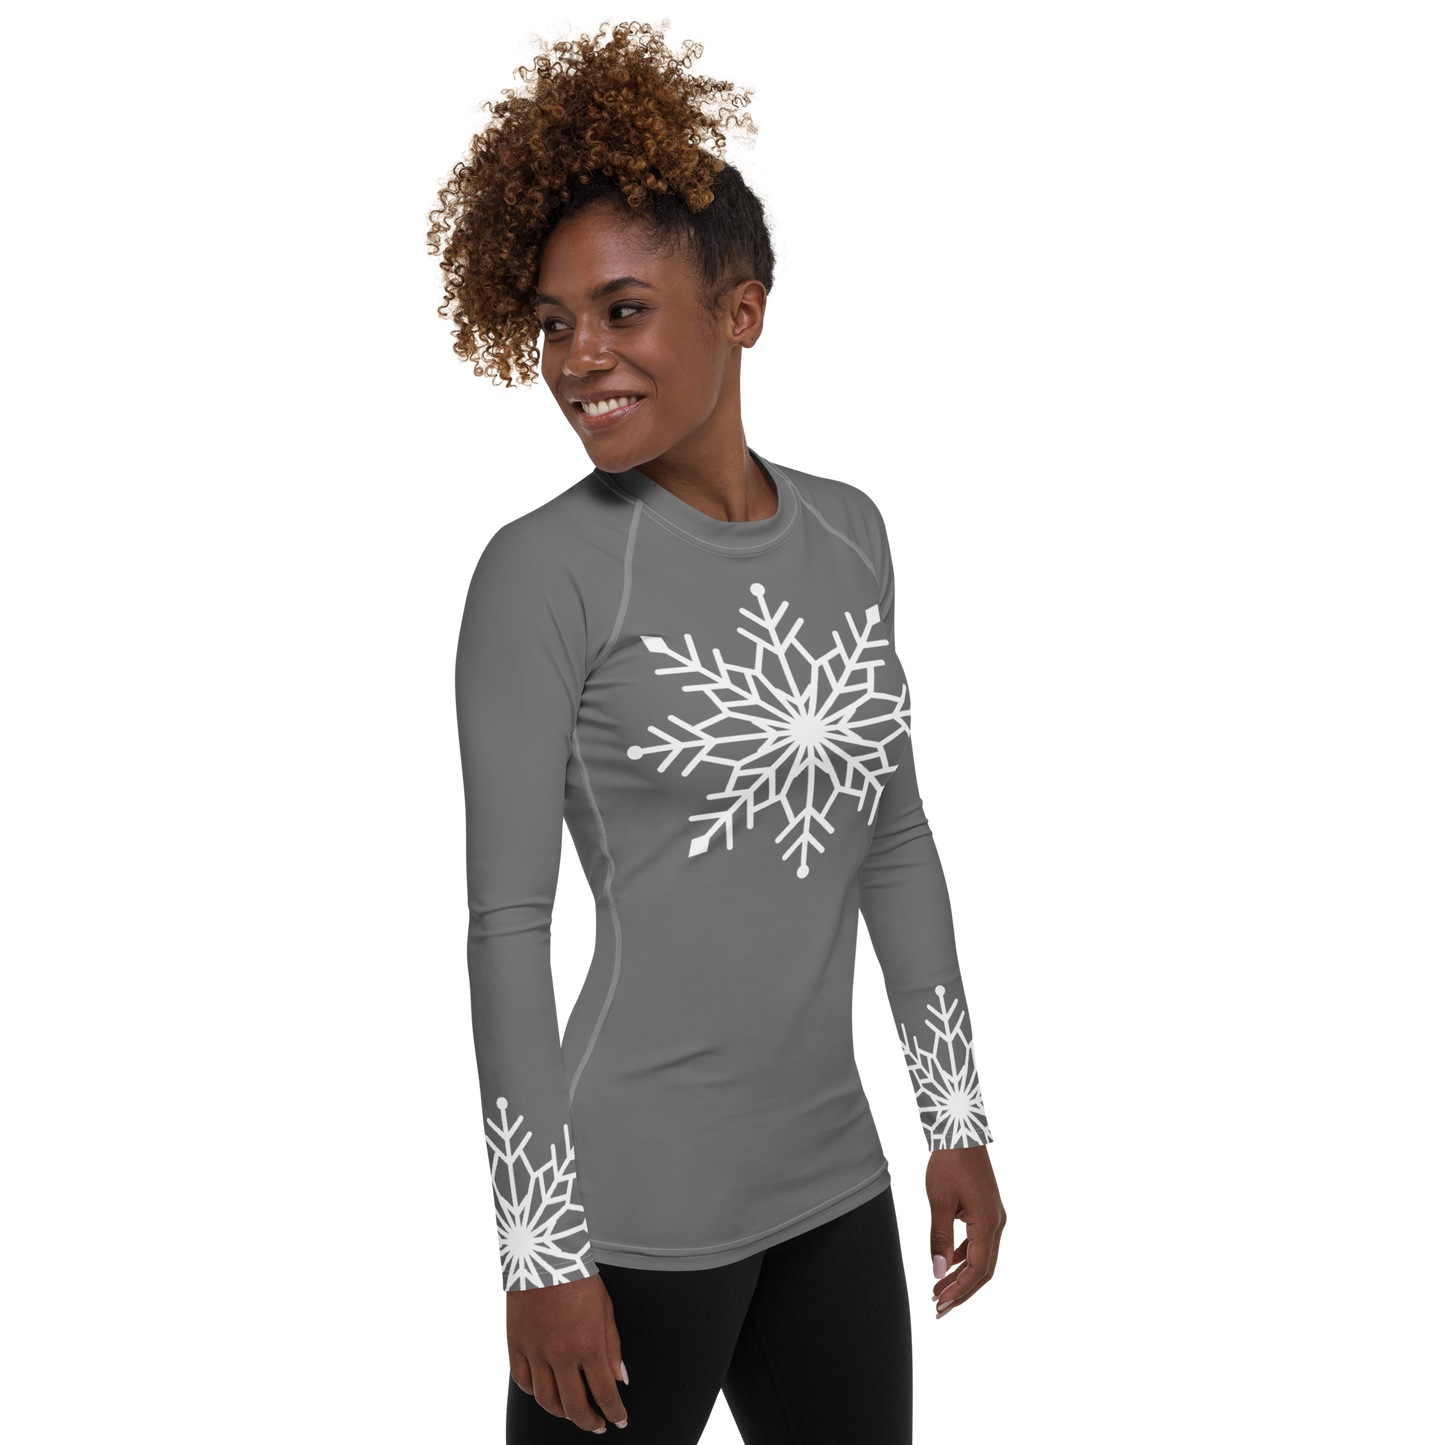 Winter Snowflake Top, White Snowflake on Graphite Gray Women's Rash Guard, Holiday Top